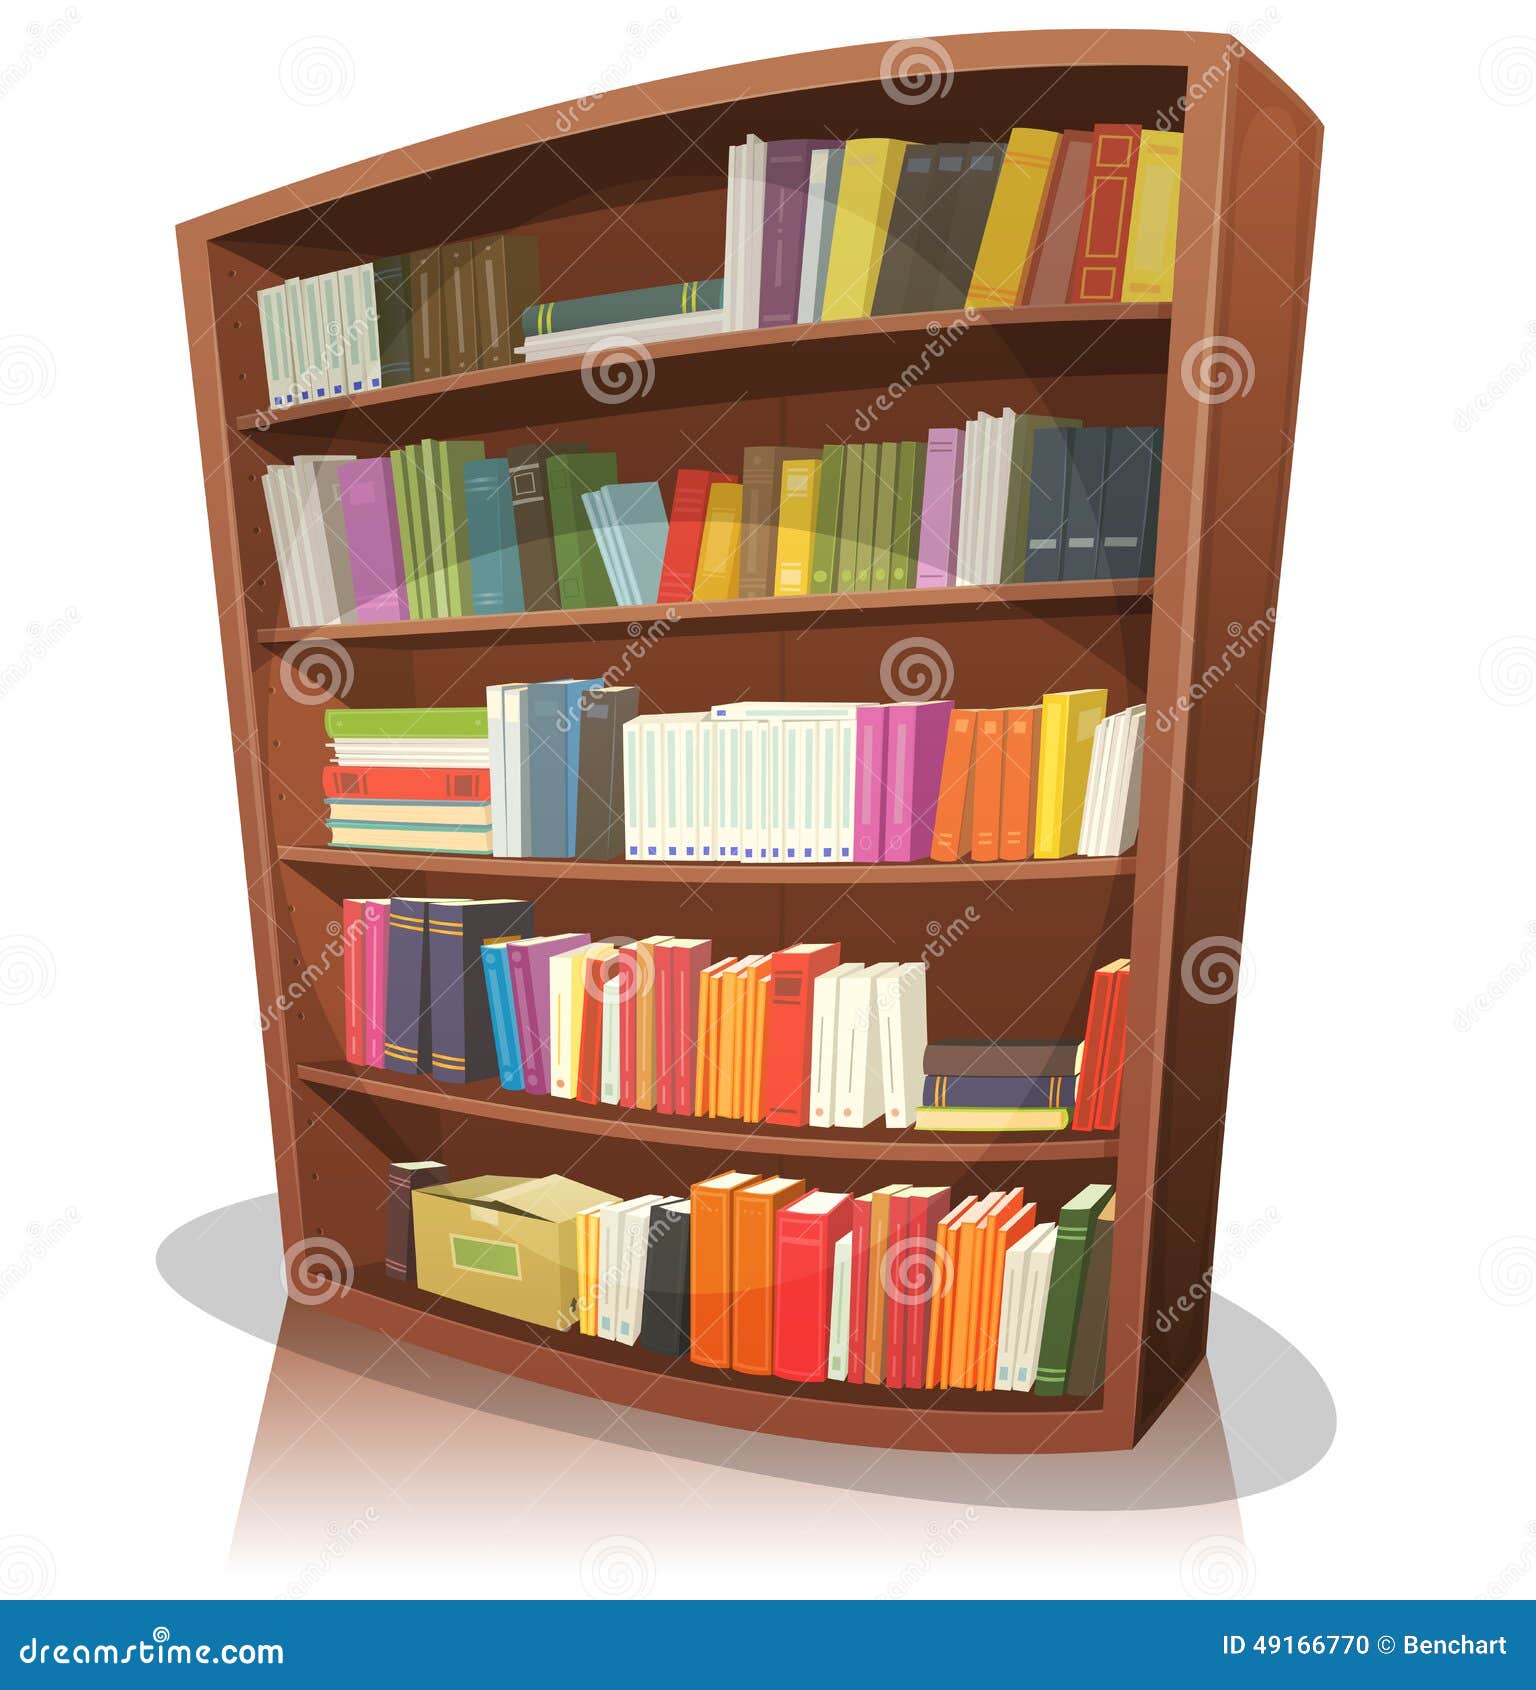 library shelves clipart - photo #46